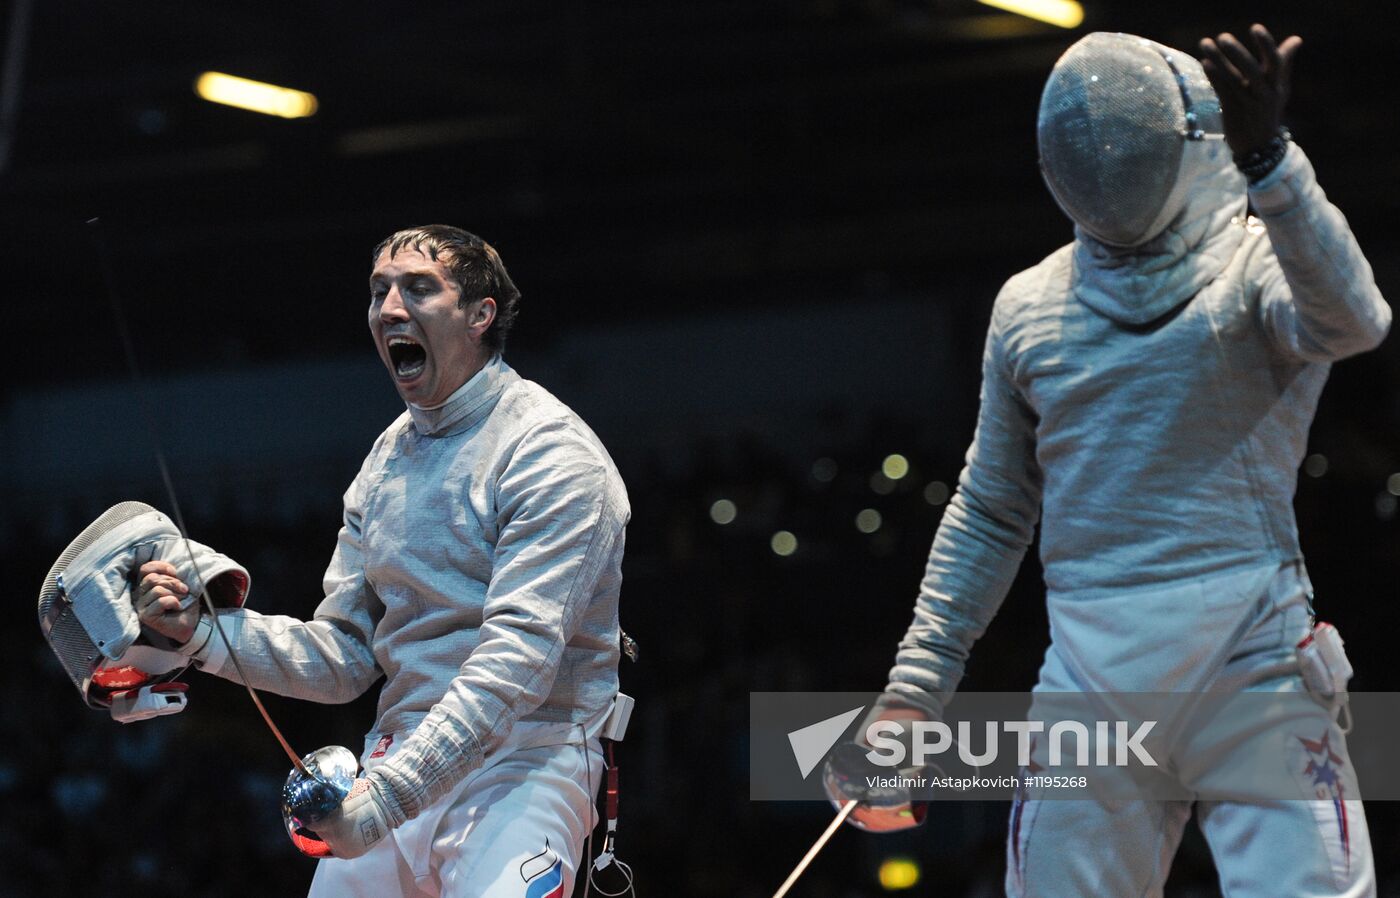 2012 Summer Olympics. Men's Fencing